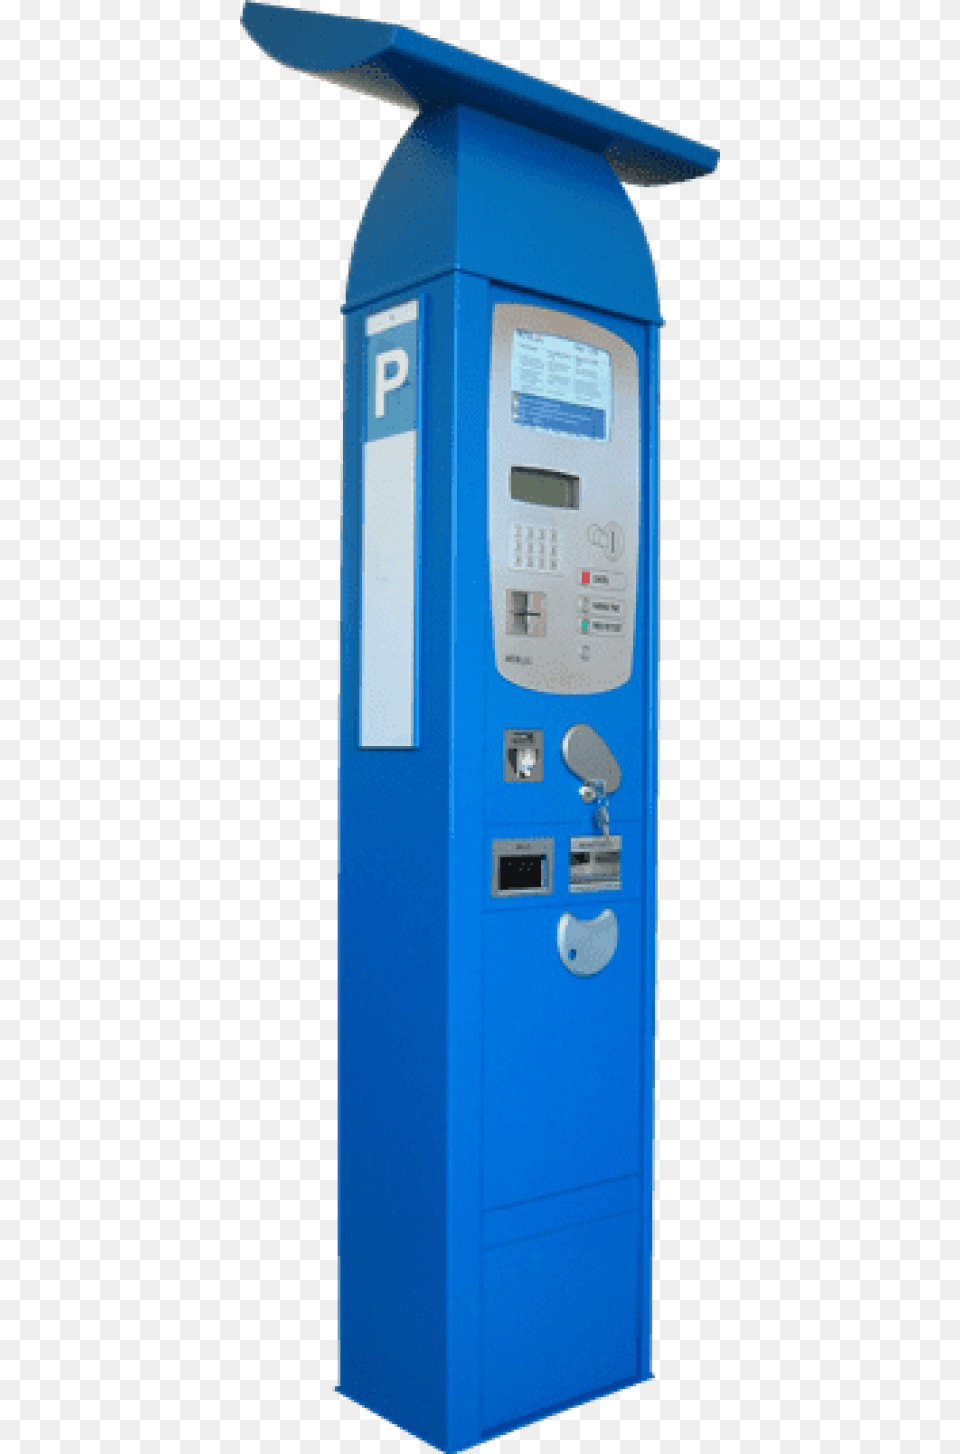 Download Blue Parking Meter Images Background Control Panel, Kiosk, Gas Pump, Machine, Pump Free Transparent Png